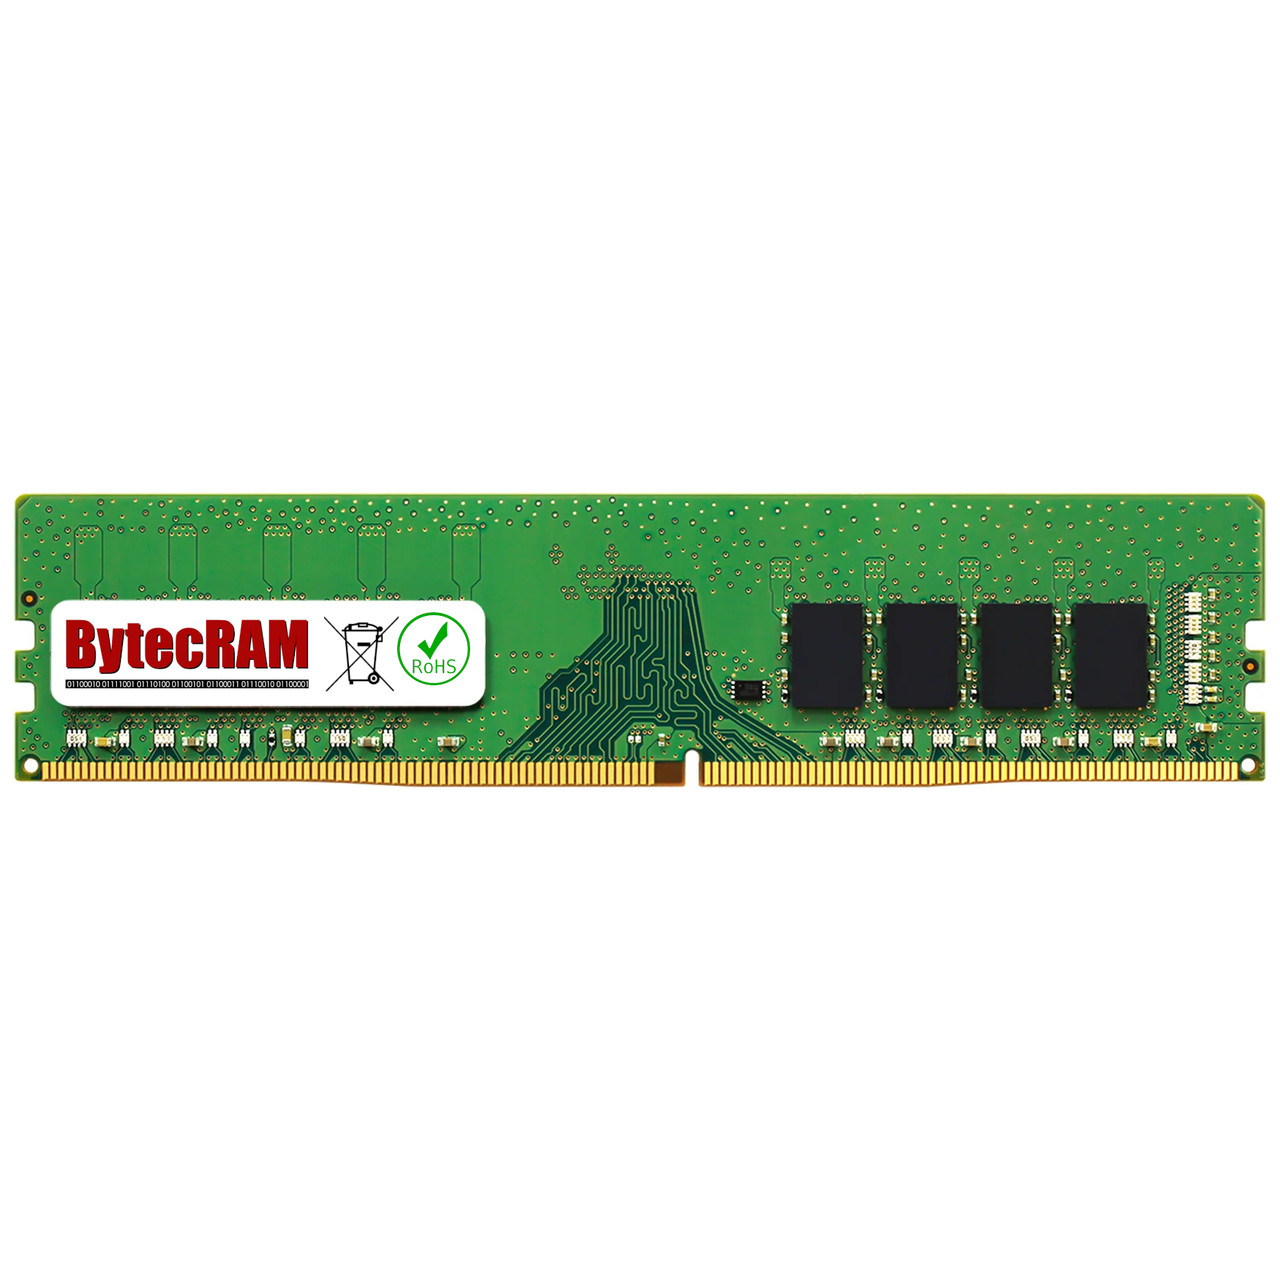 eBay*8GB Acer Predator PO3-600-UR15 DDR4 2666MHz UDIMM Memory RAM Upgrade